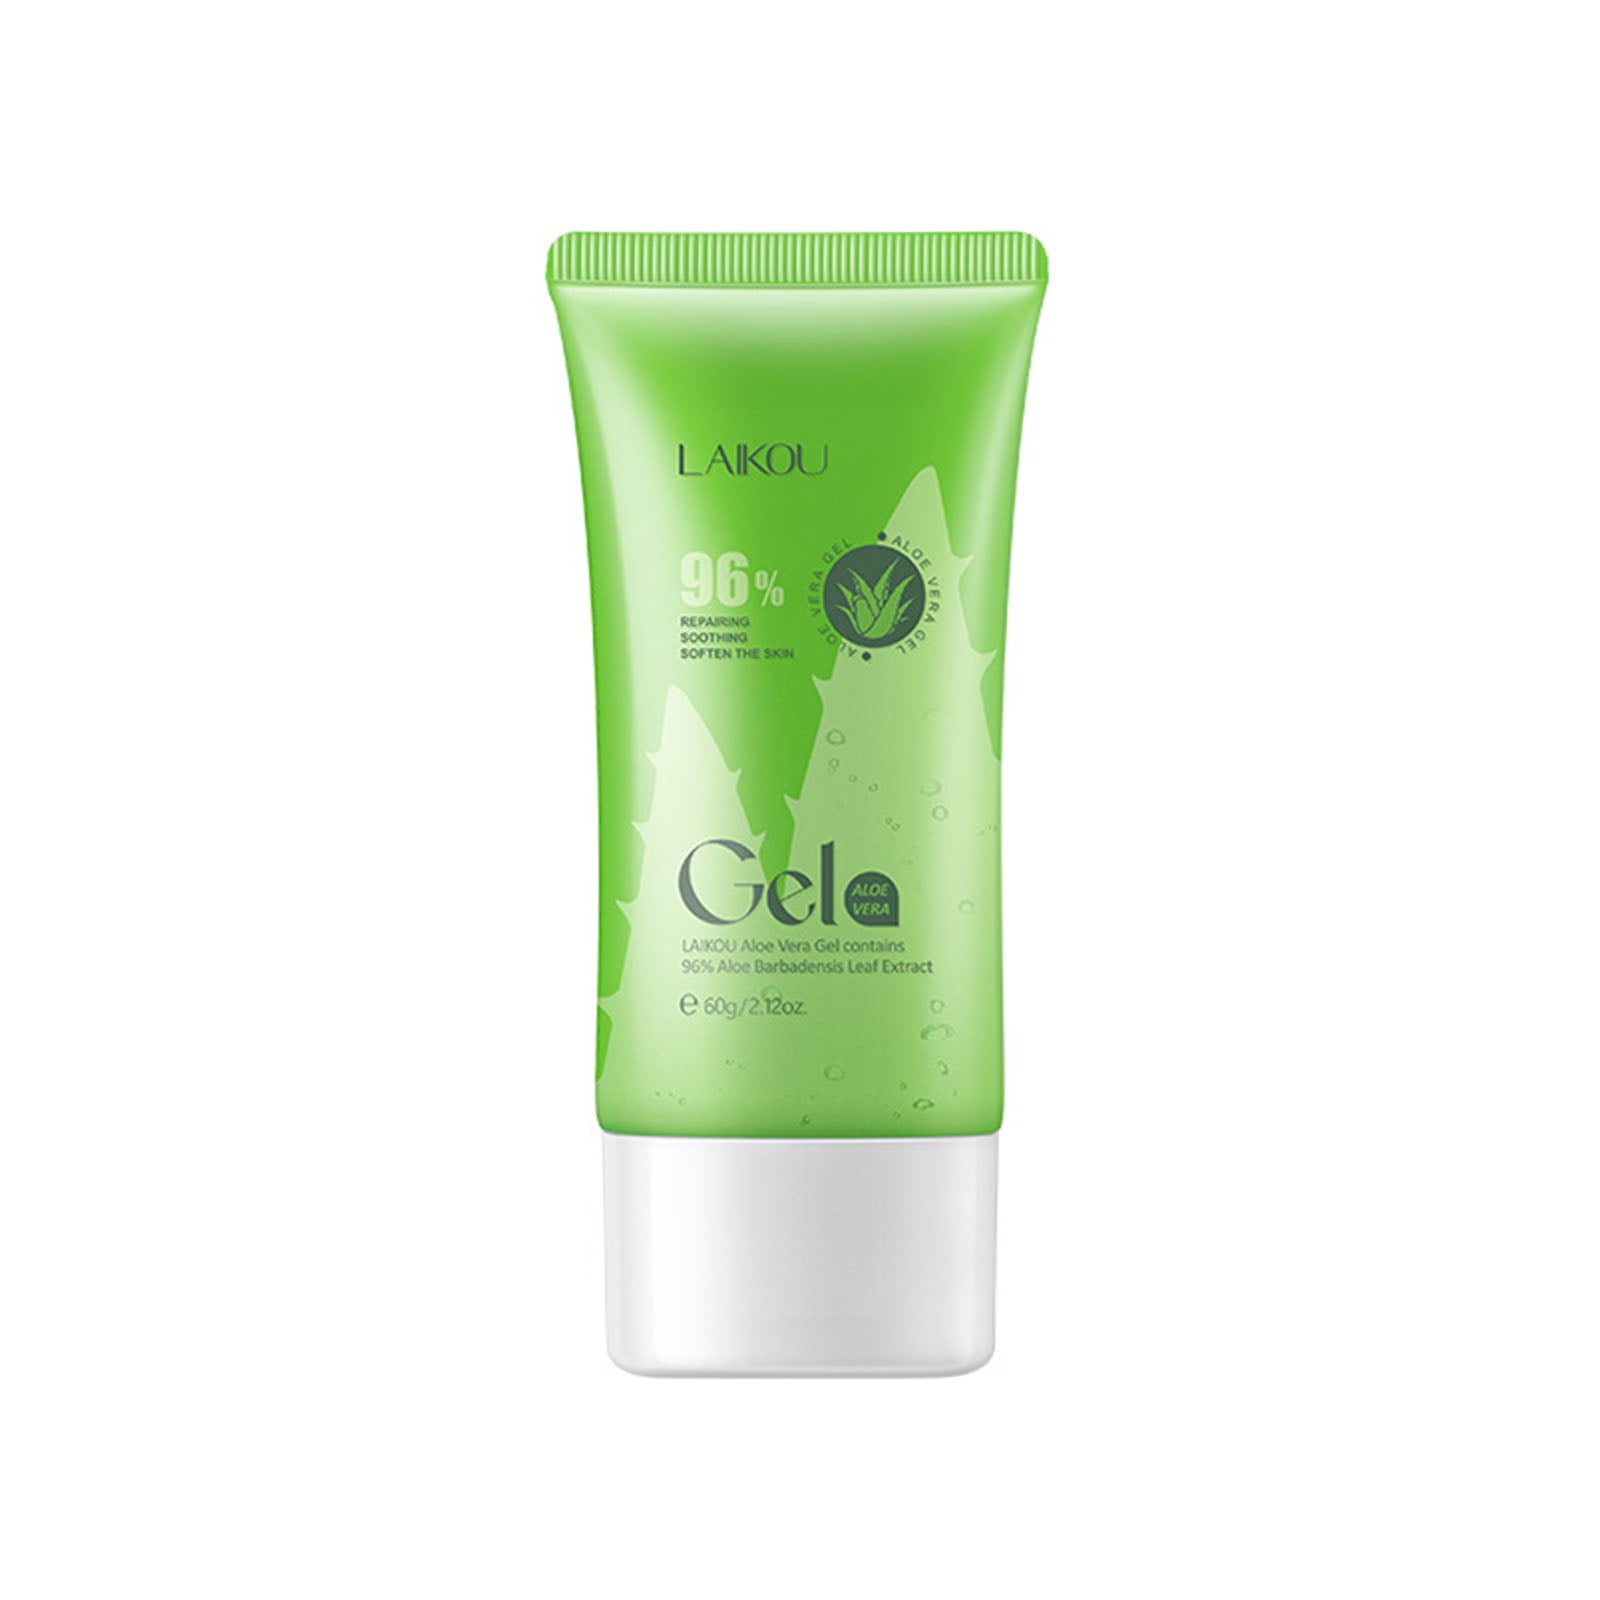 Organic Aloe Vera Gel for Face, Skin, Hair & Sunburn Relief Pure Aloe Vera Vegan 60g with Pure Aloe From Freshly Cut -